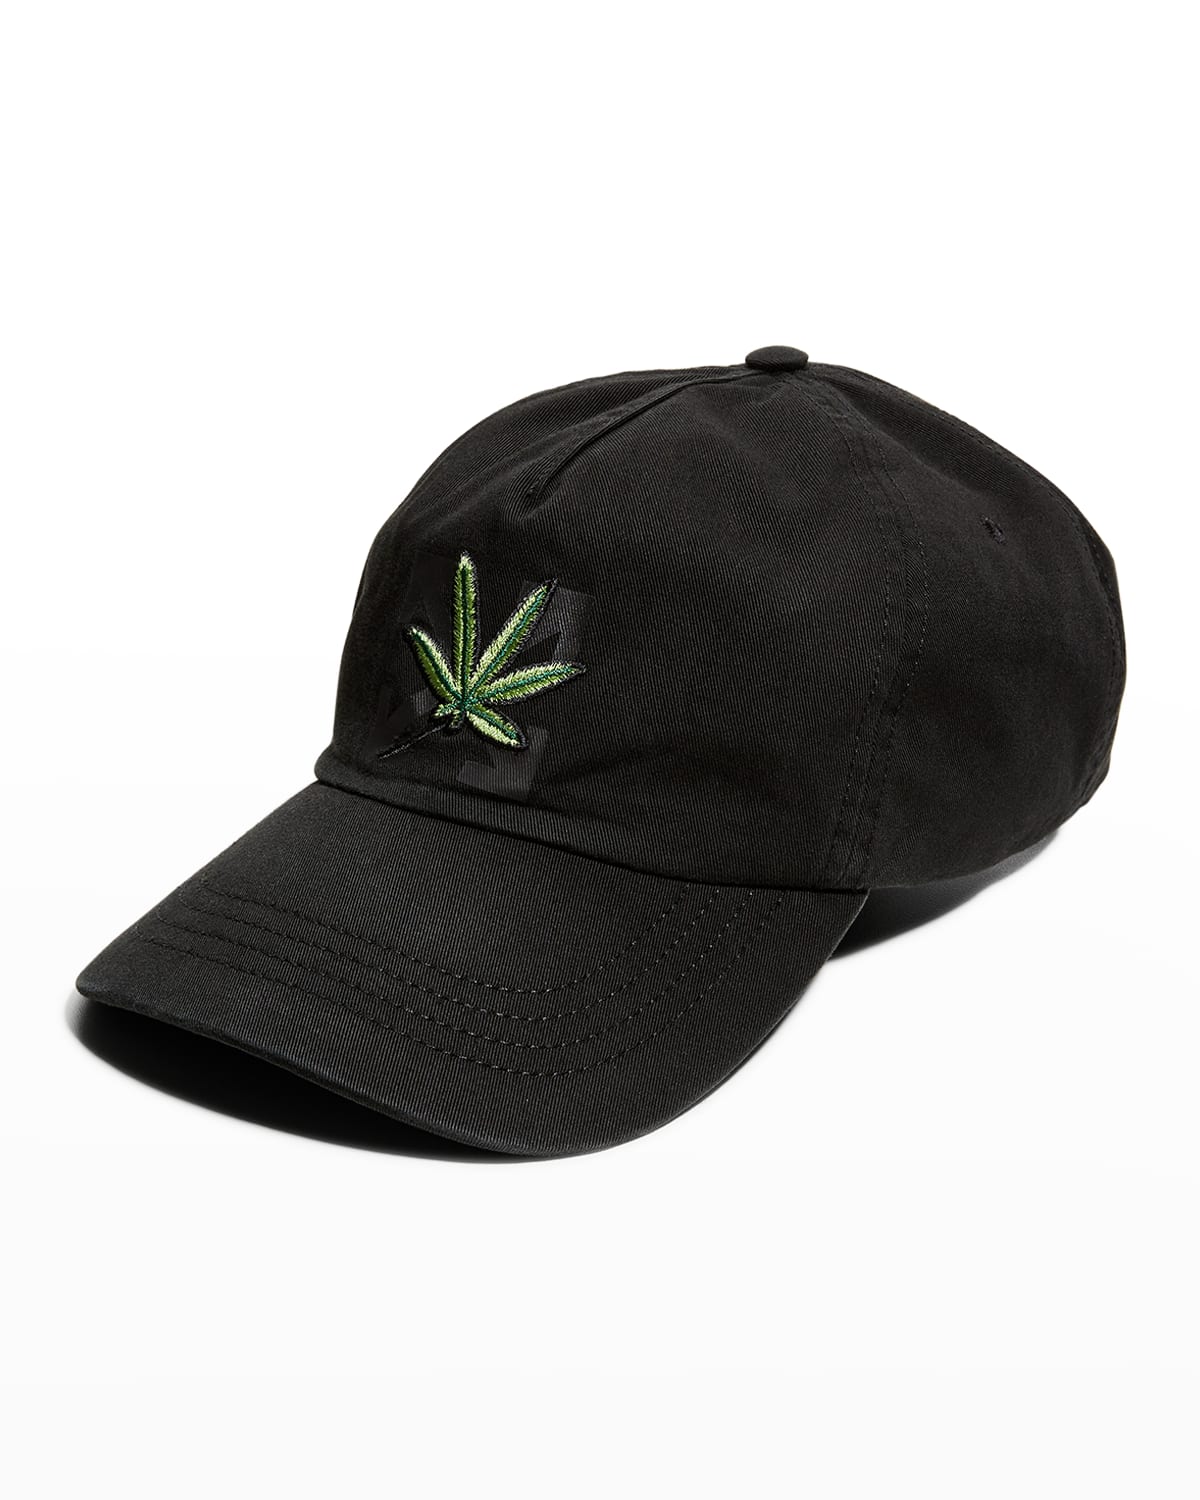 THC Weed Cannabis Logo Embroidered Baseball Cap Dad Hat Sport Cap Unisex Sportswear